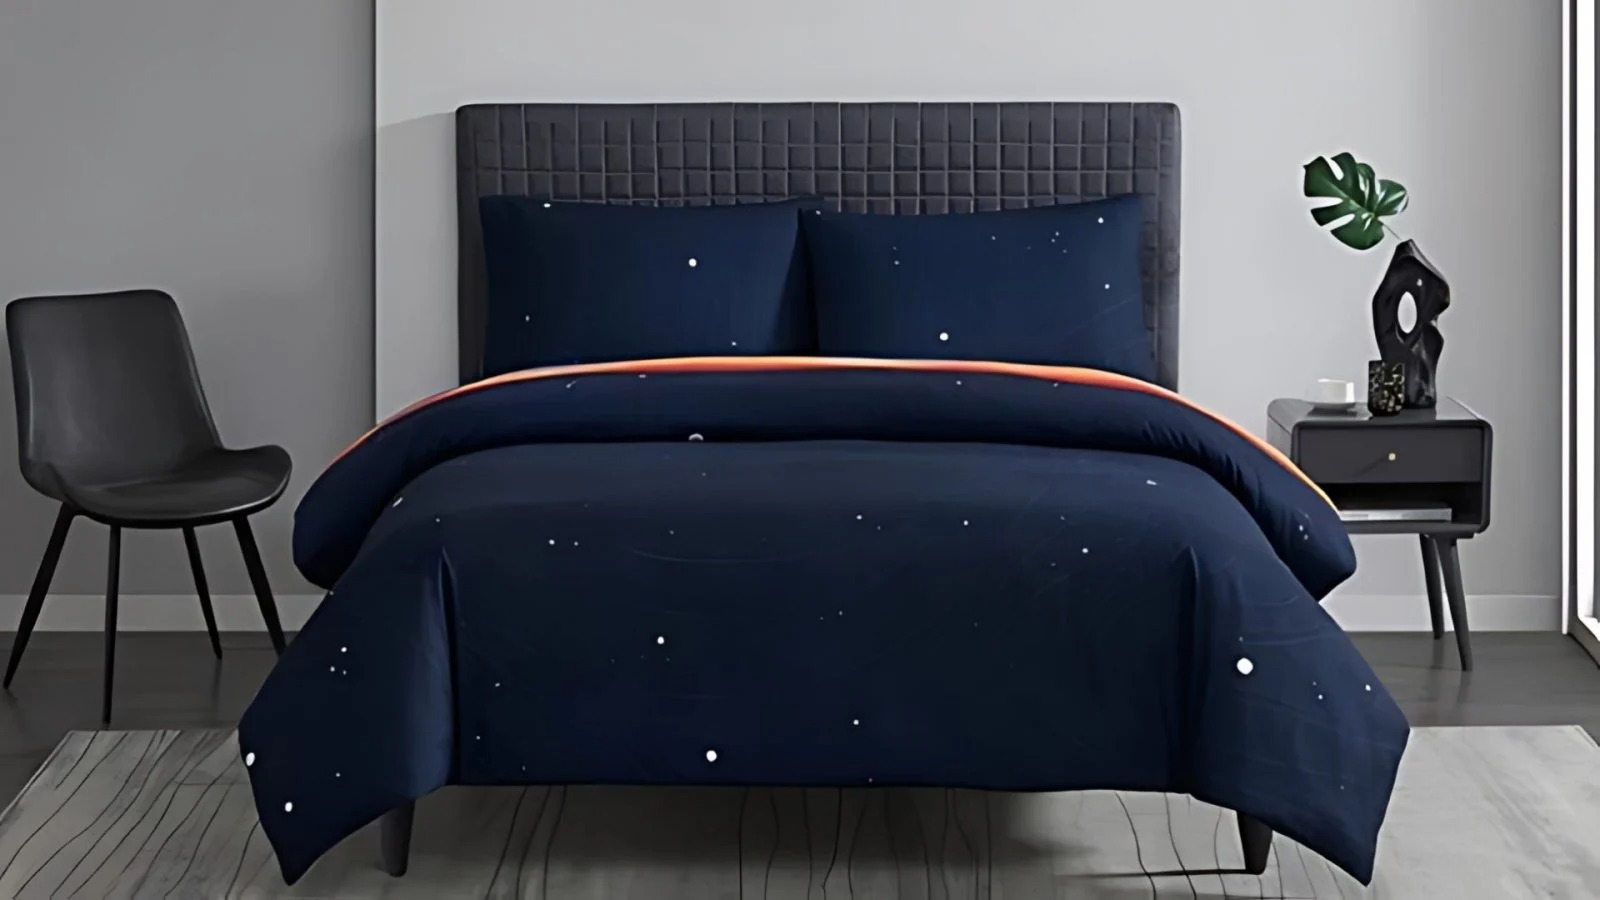 Bethesda周边商铺推出《星空》星图主题床品